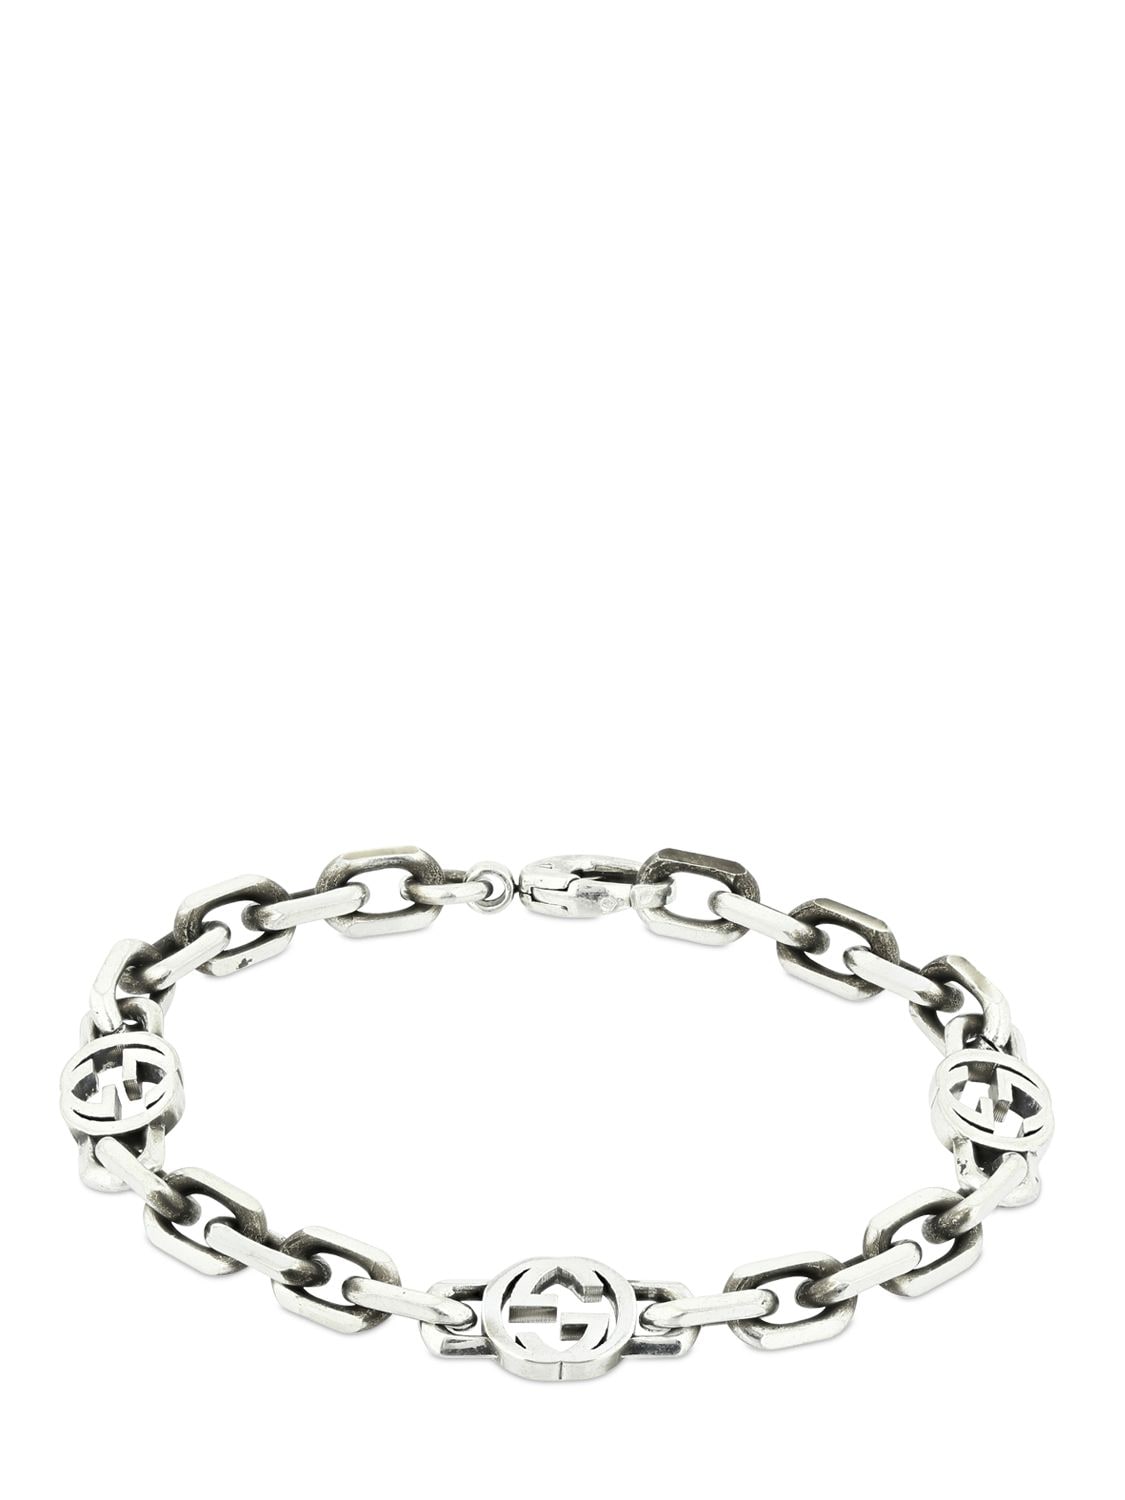 GUCCI Interlocking G Chain Bracelet for Women